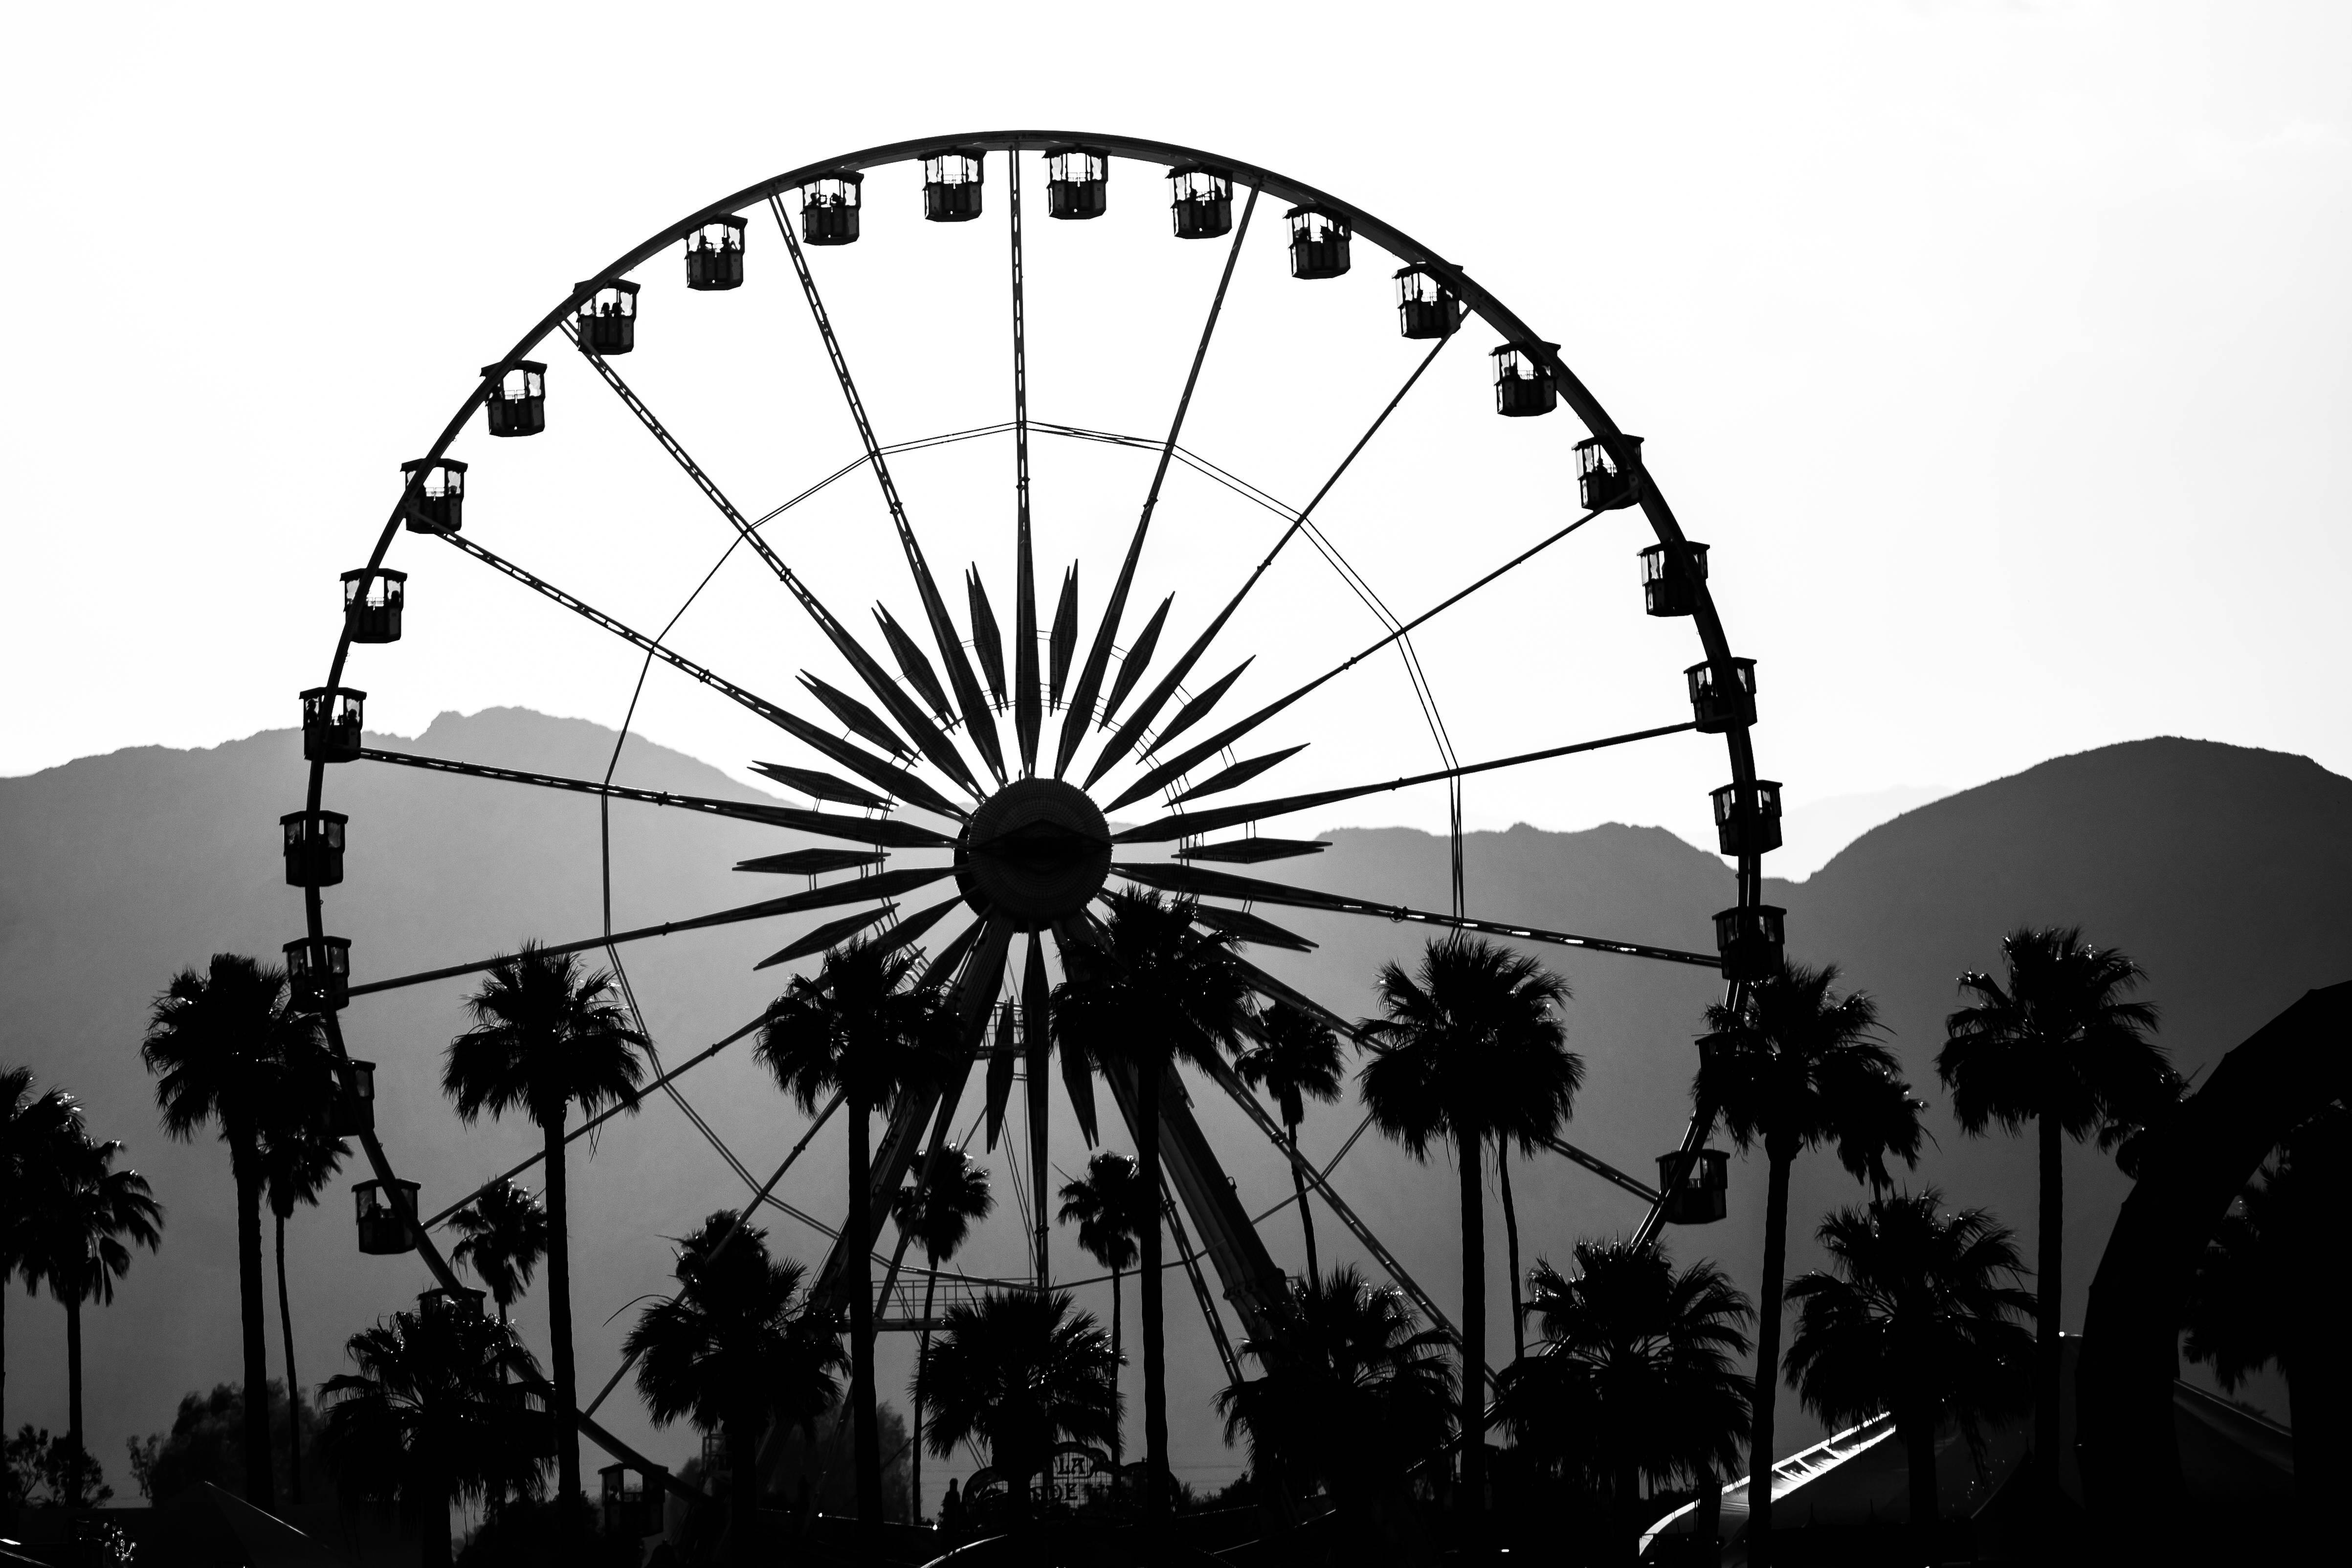 Best Coachella desktop wallpapers : Coachella